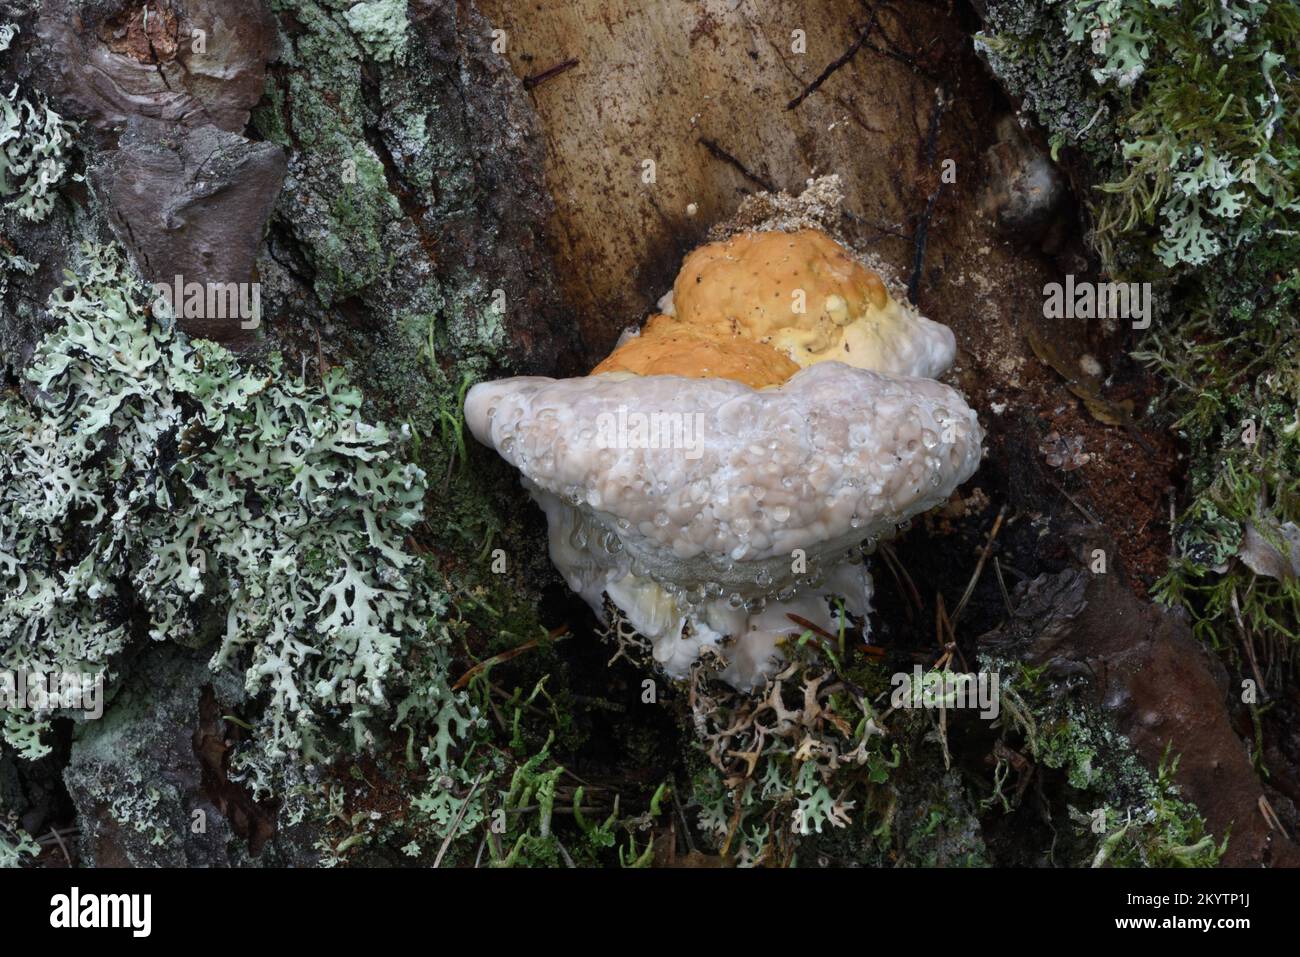 Giovane Conk con cintura rossa o decadimento dello stelo Fungus Fomitopsis pinicola Shelf Fungus o Bracket Fungus o funghi Foto Stock